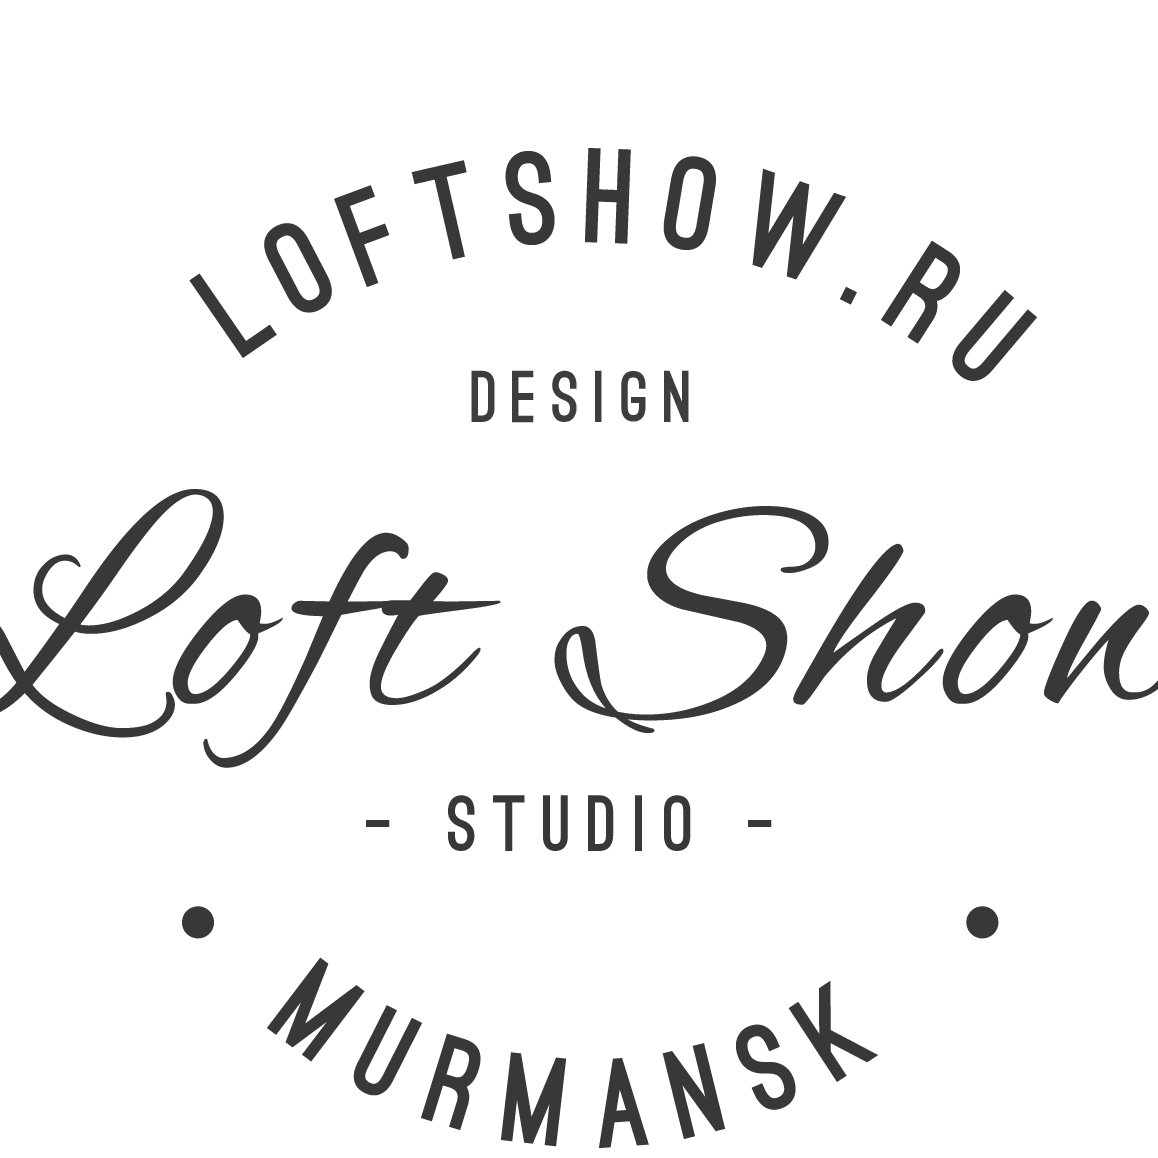 Дизайн студия Loftshow.ru